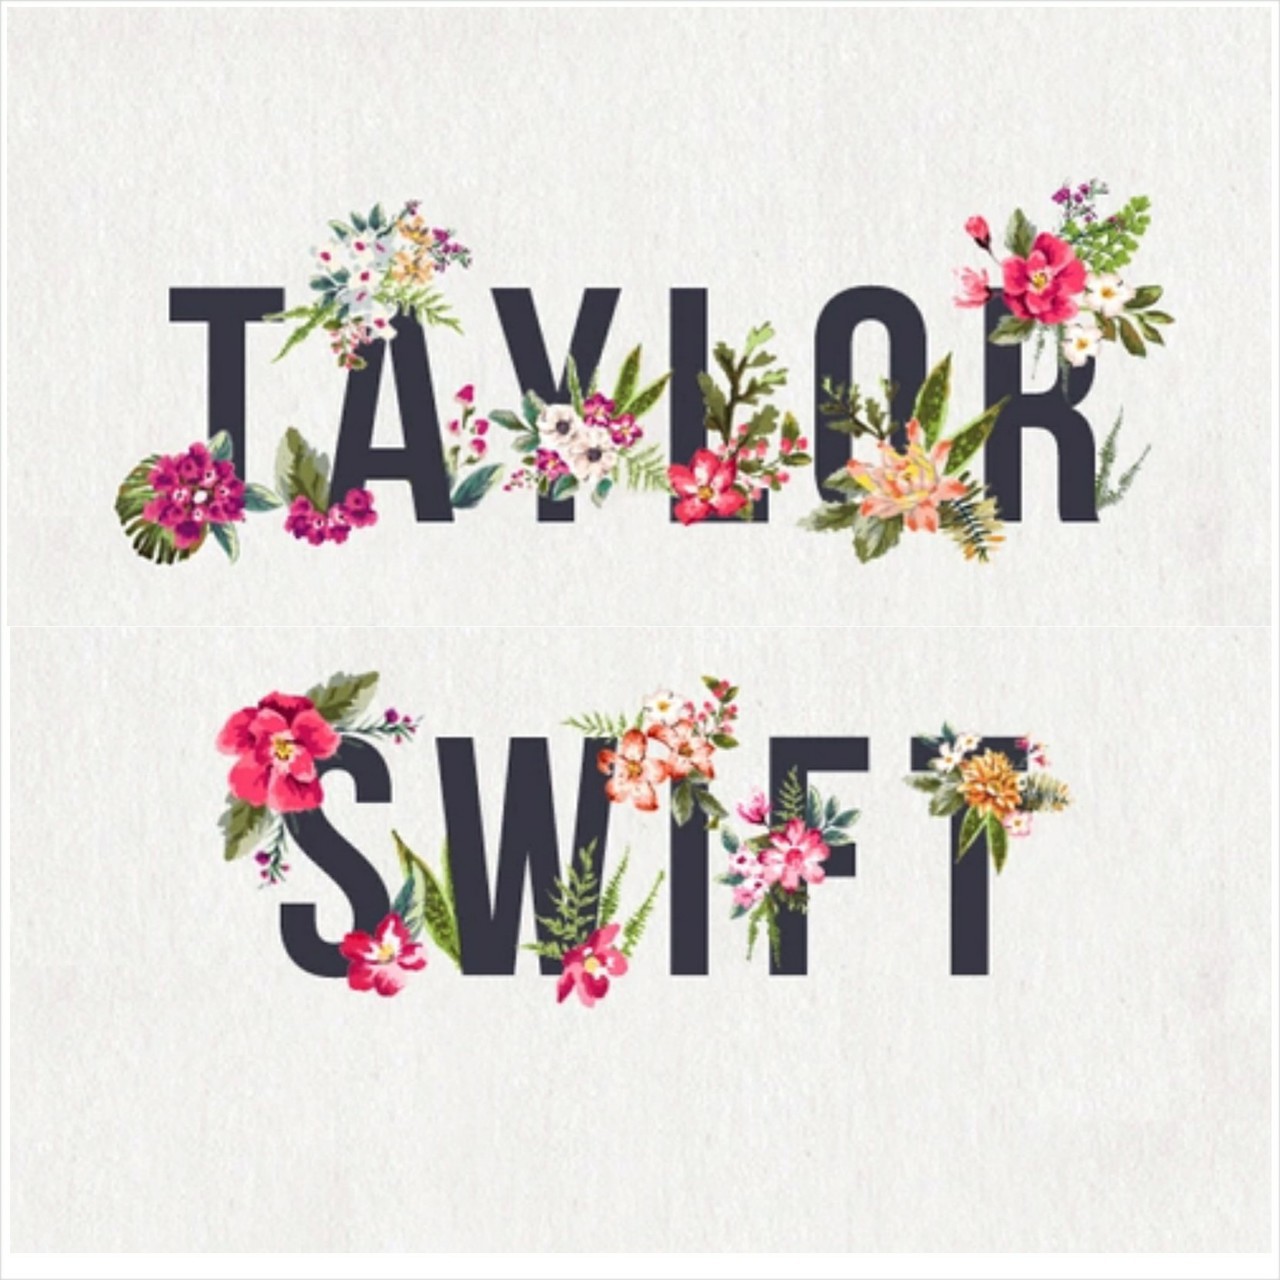 Taylor Swift By N A B I H We Heart It